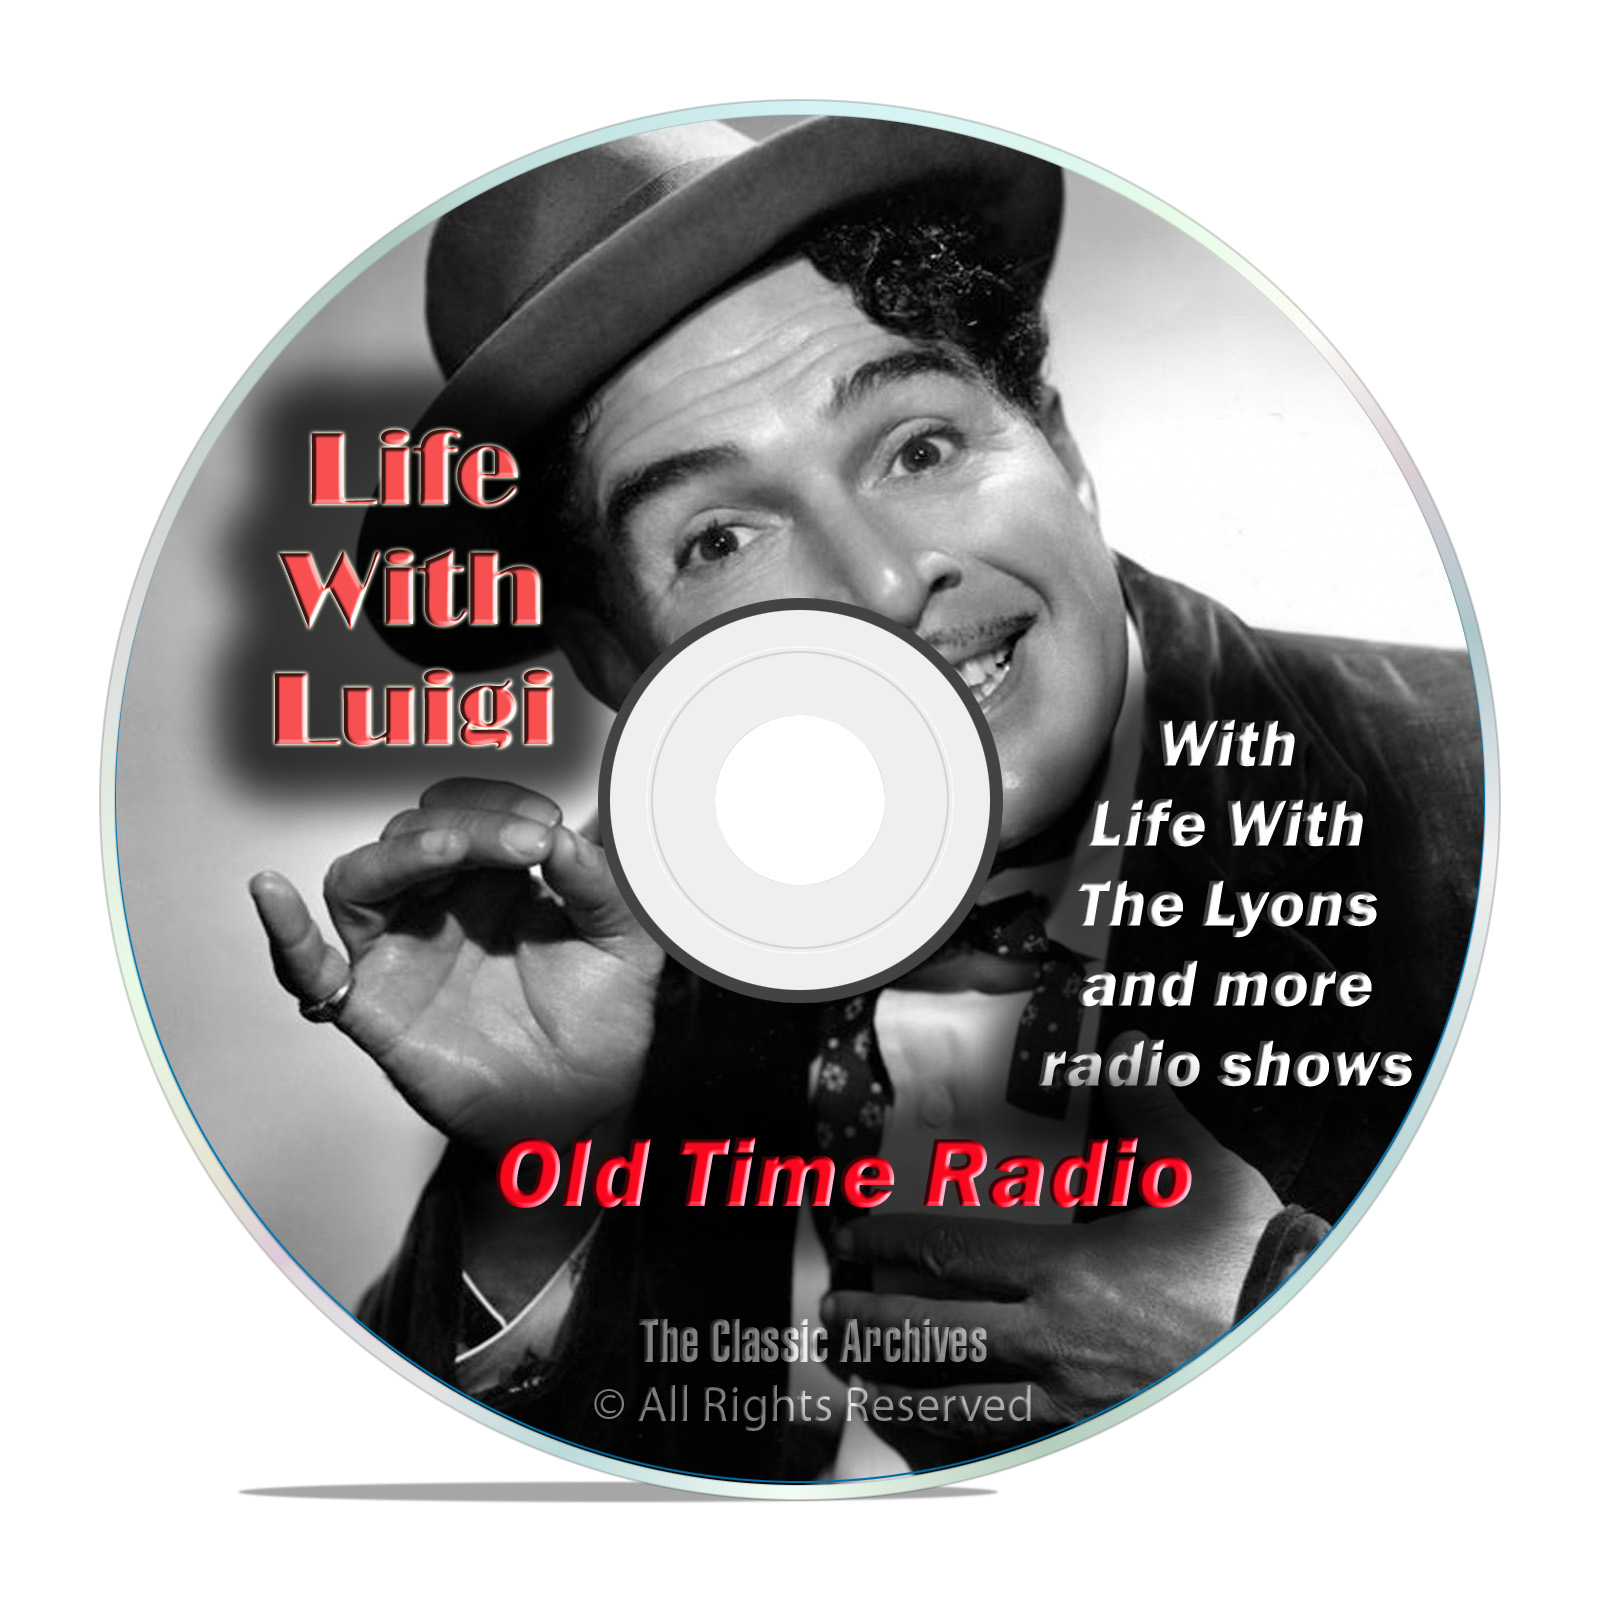 Life With Luigi, 924 Old Time Radio Sitcom Comedy Shows With Bonus mp3 DVD